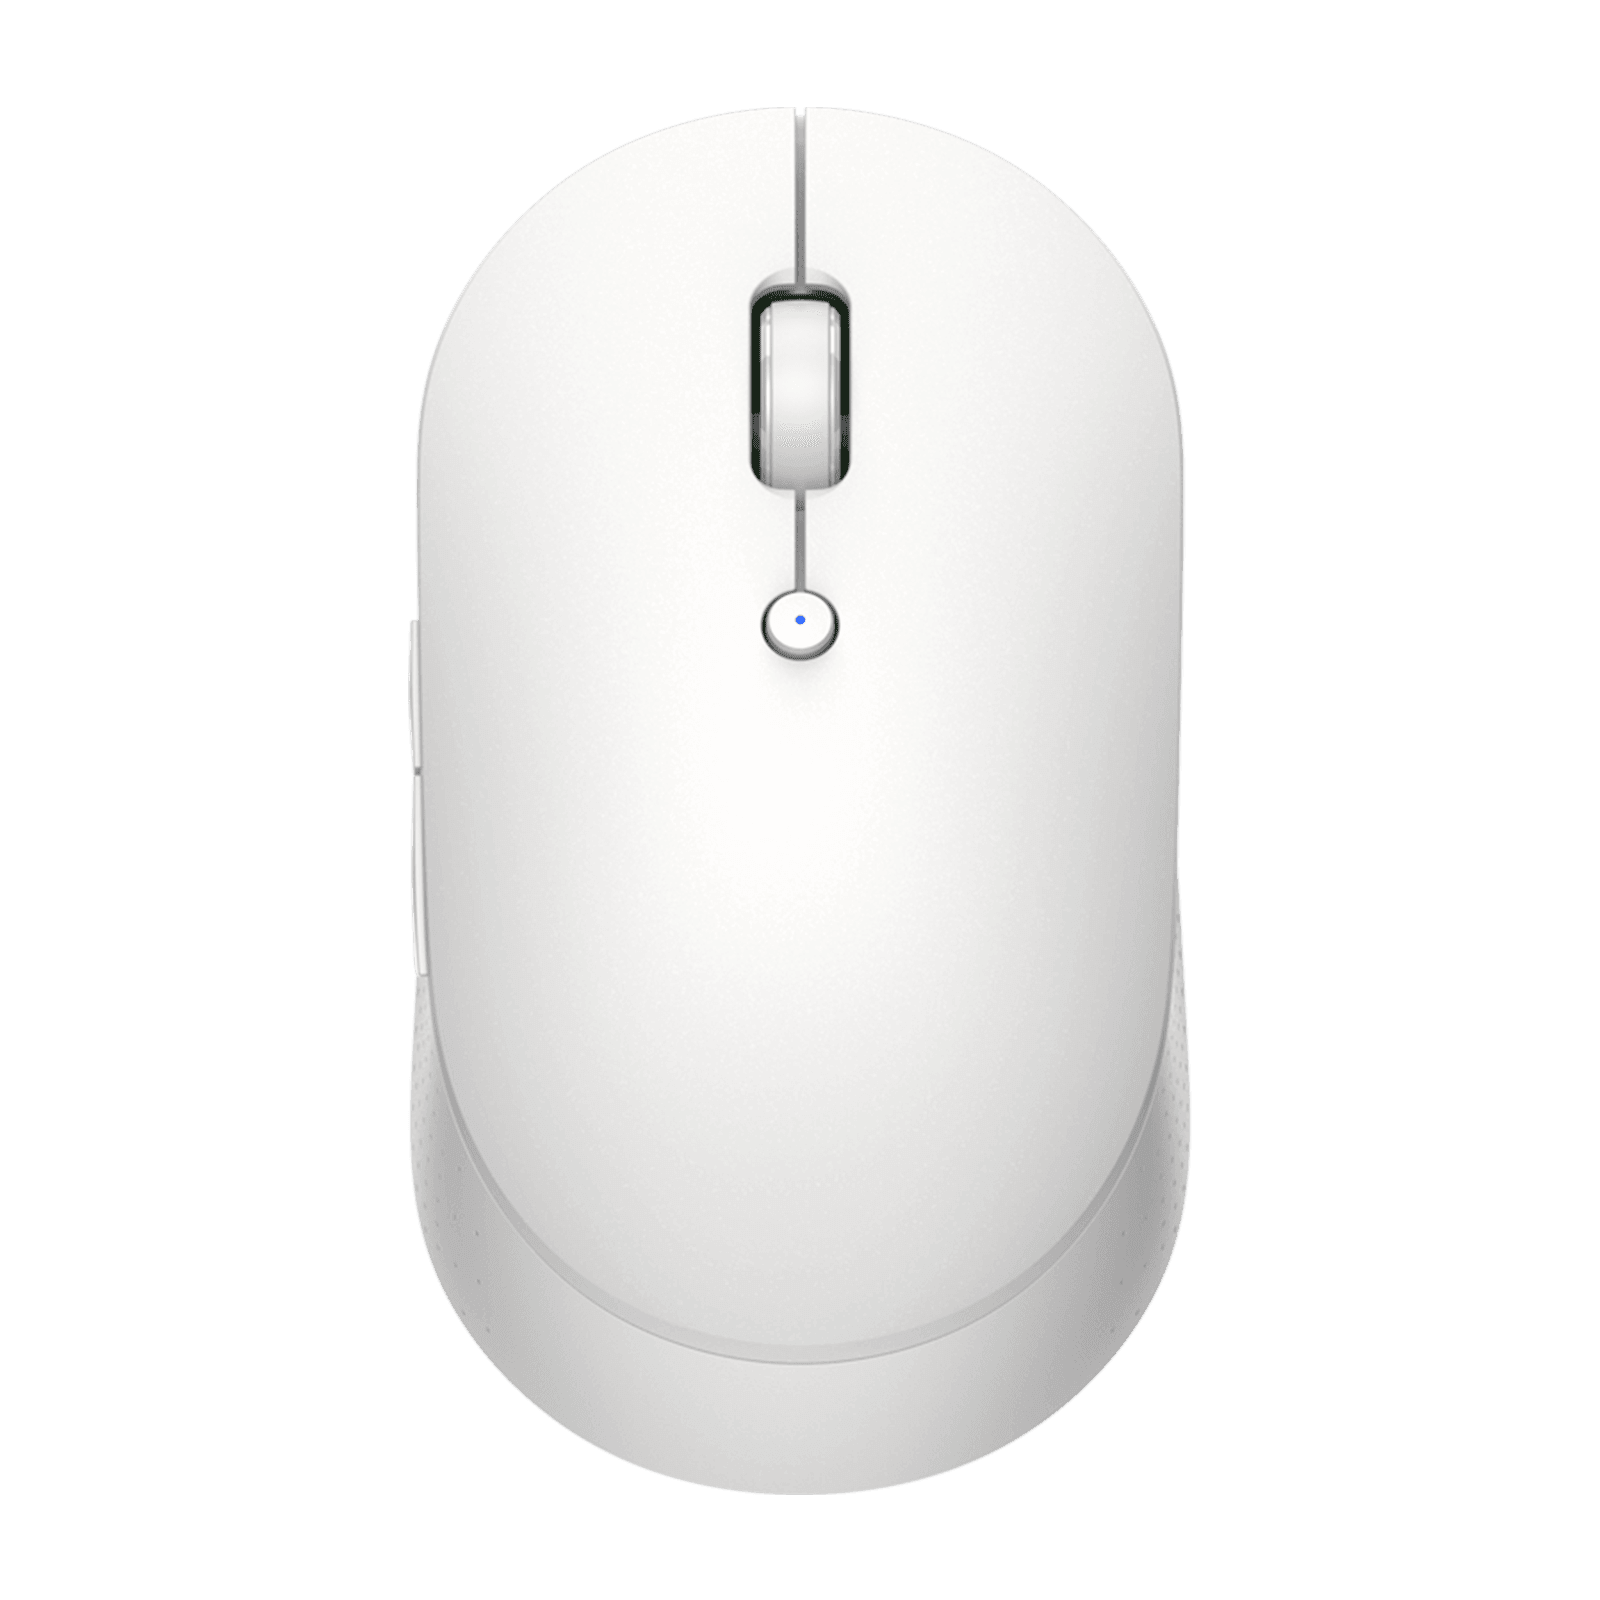 Mi Dual Mode Wireless Mouse - Brightex Retail UK